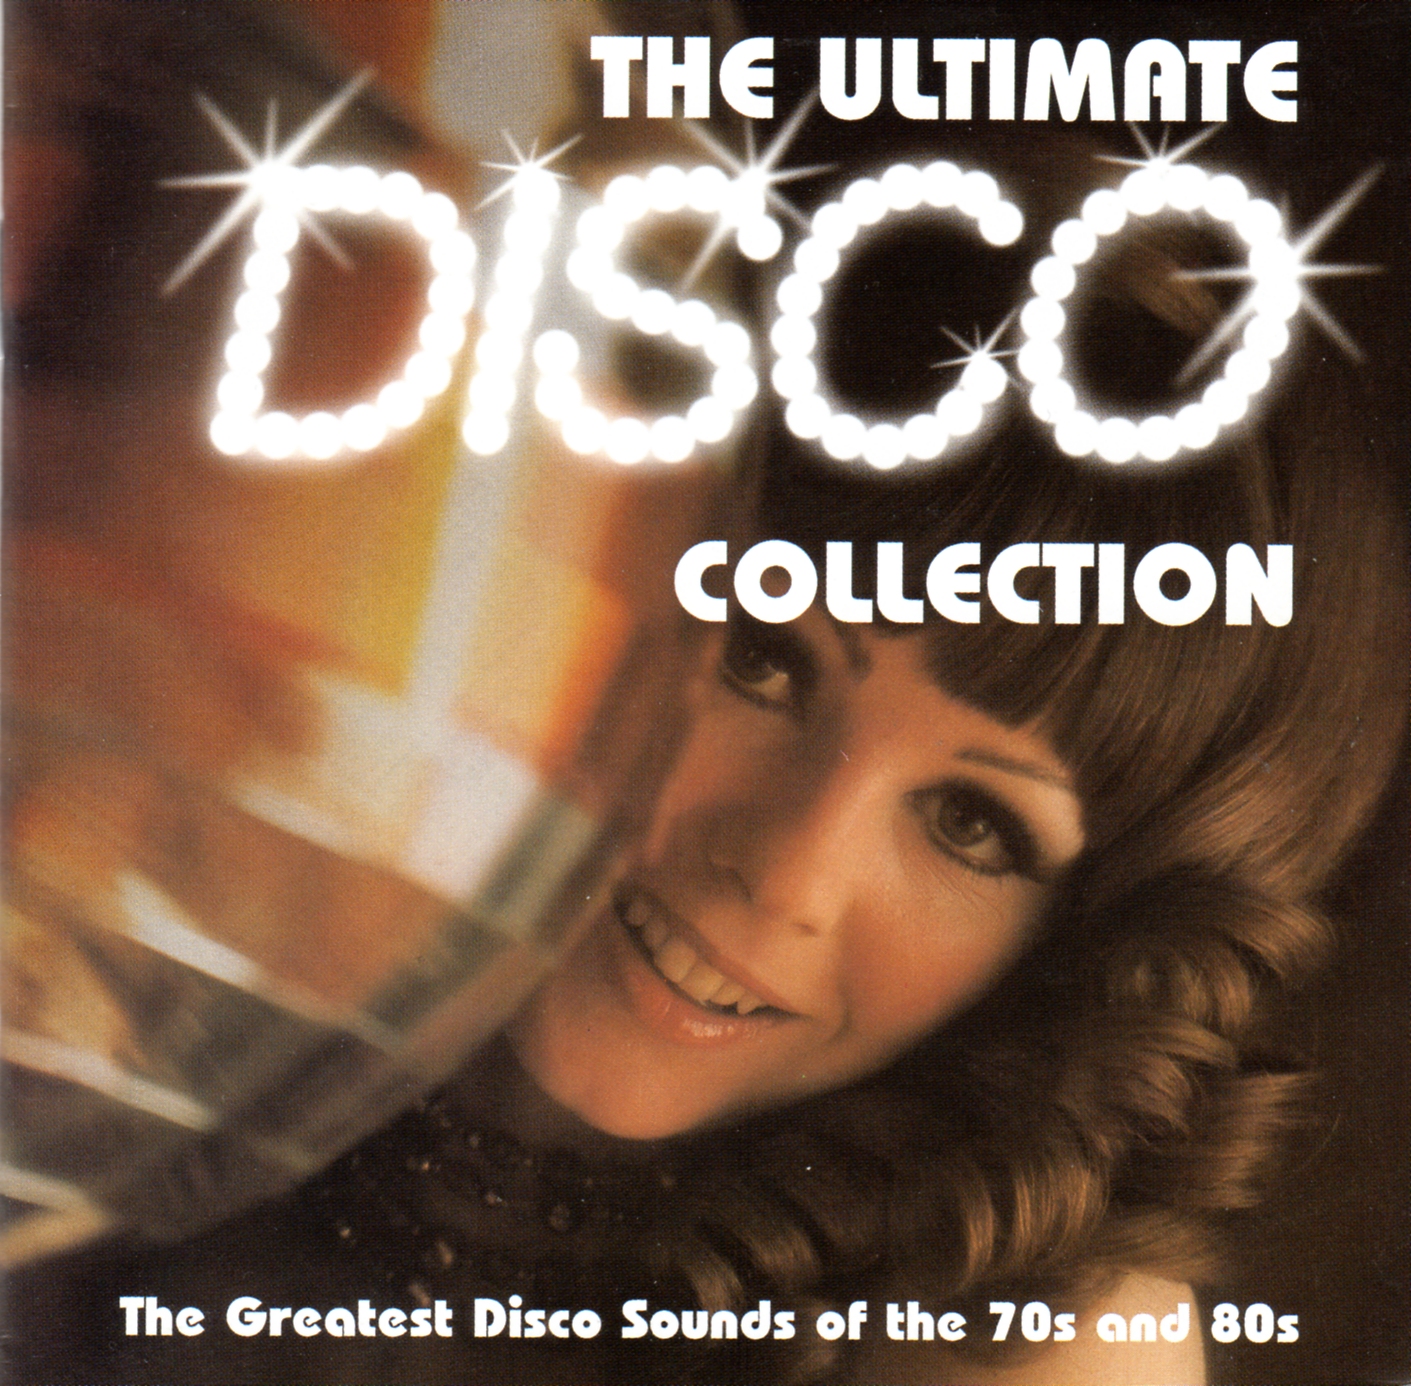 Зарубежные хиты 70 80 годов. Disco collection 70s & 80s. 70s Ultimate collection. Disco 80s обложка альбома. Disco 70's обложки.